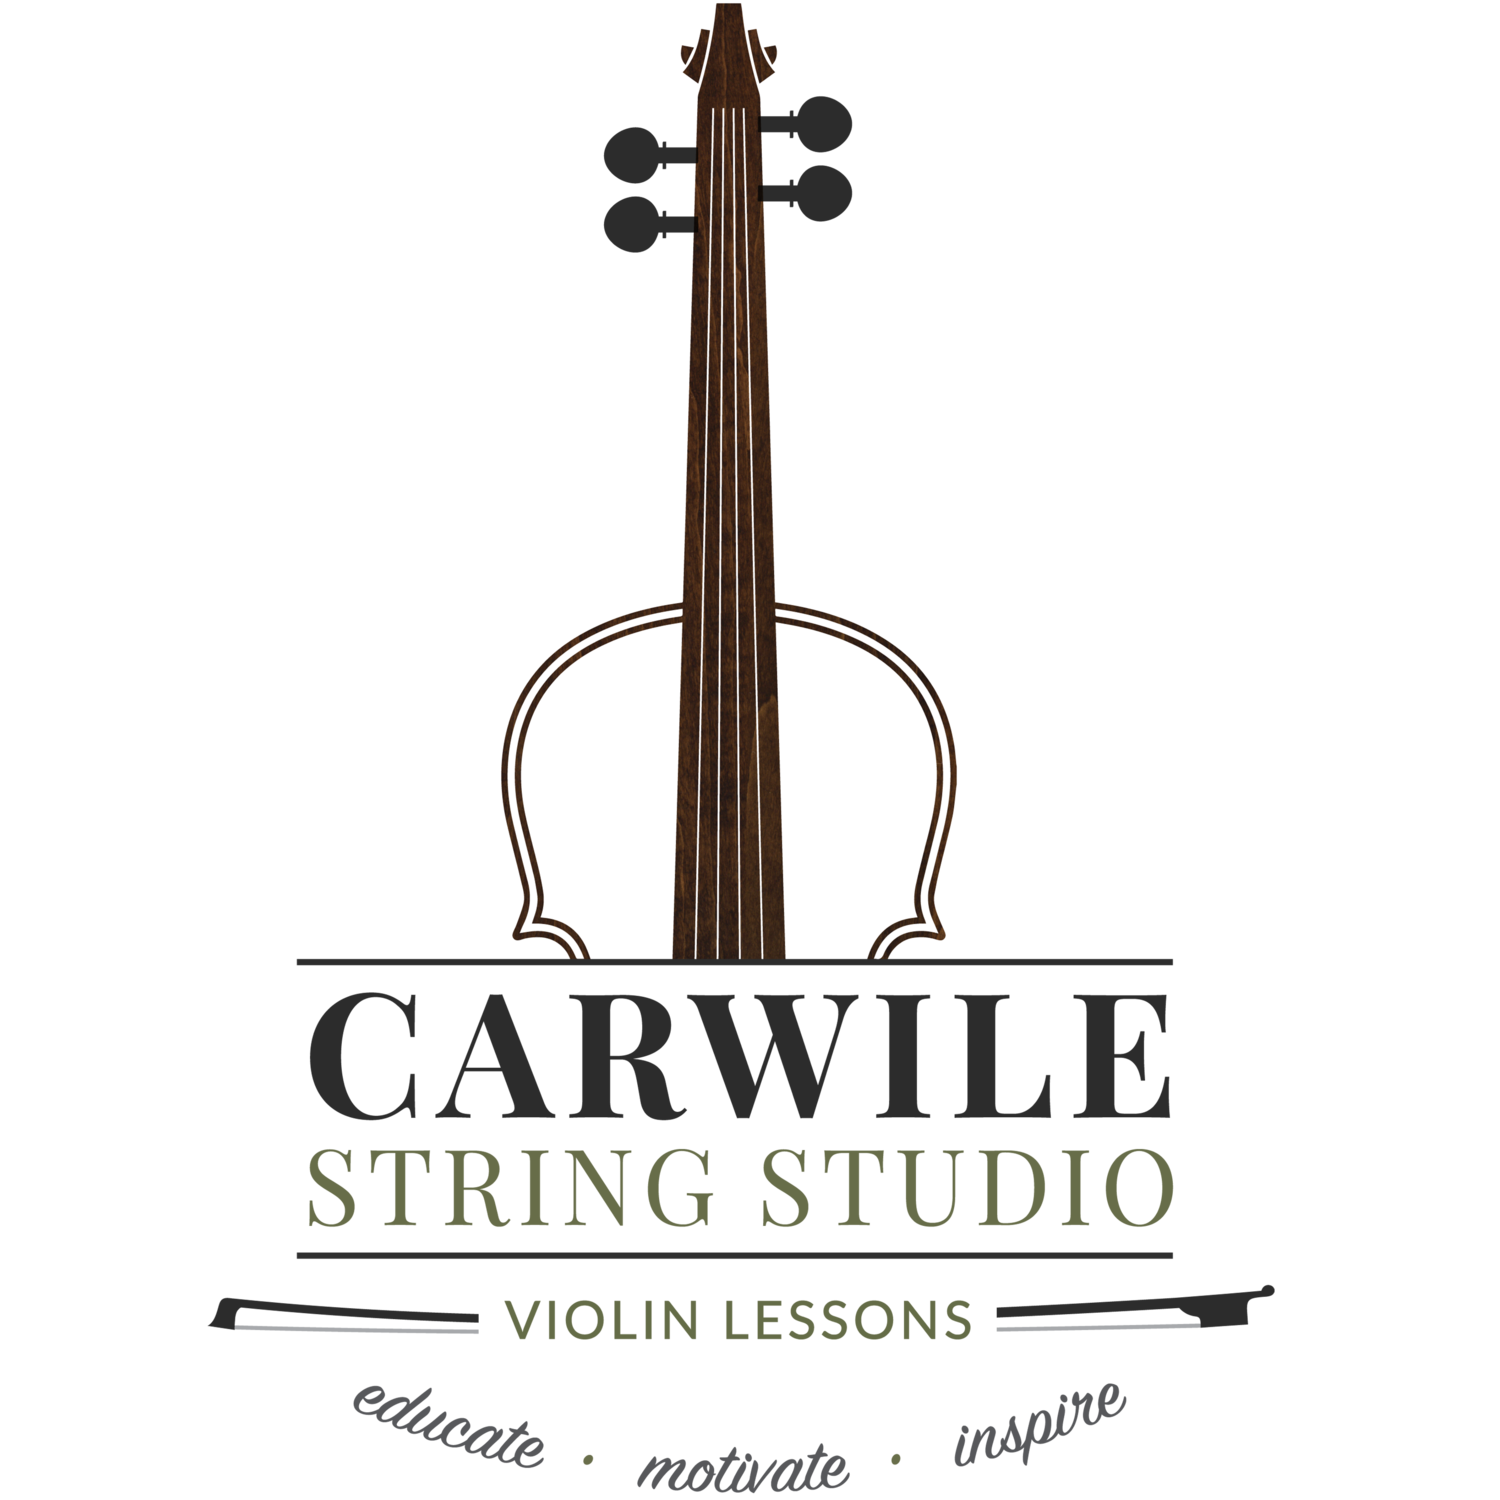 Carwile String Studio | Violin Lessons - Lexington, Kentucky